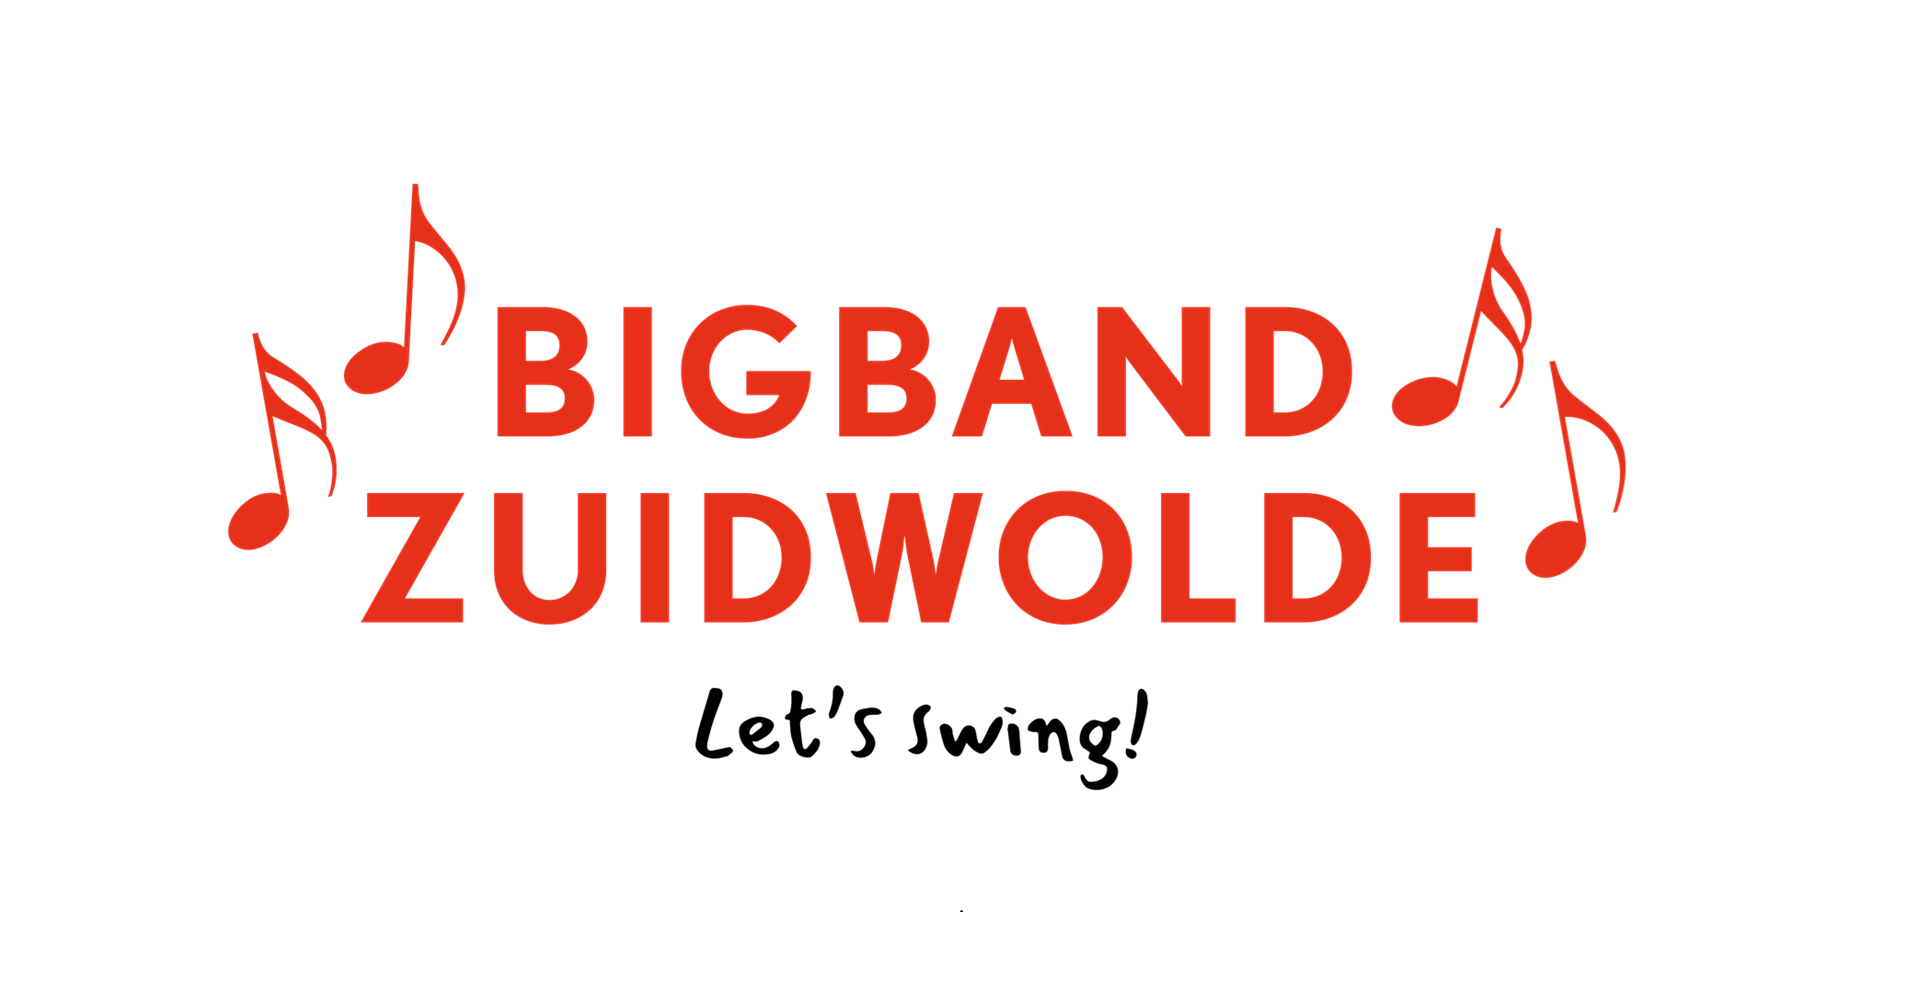 Bigband Zuidwolde